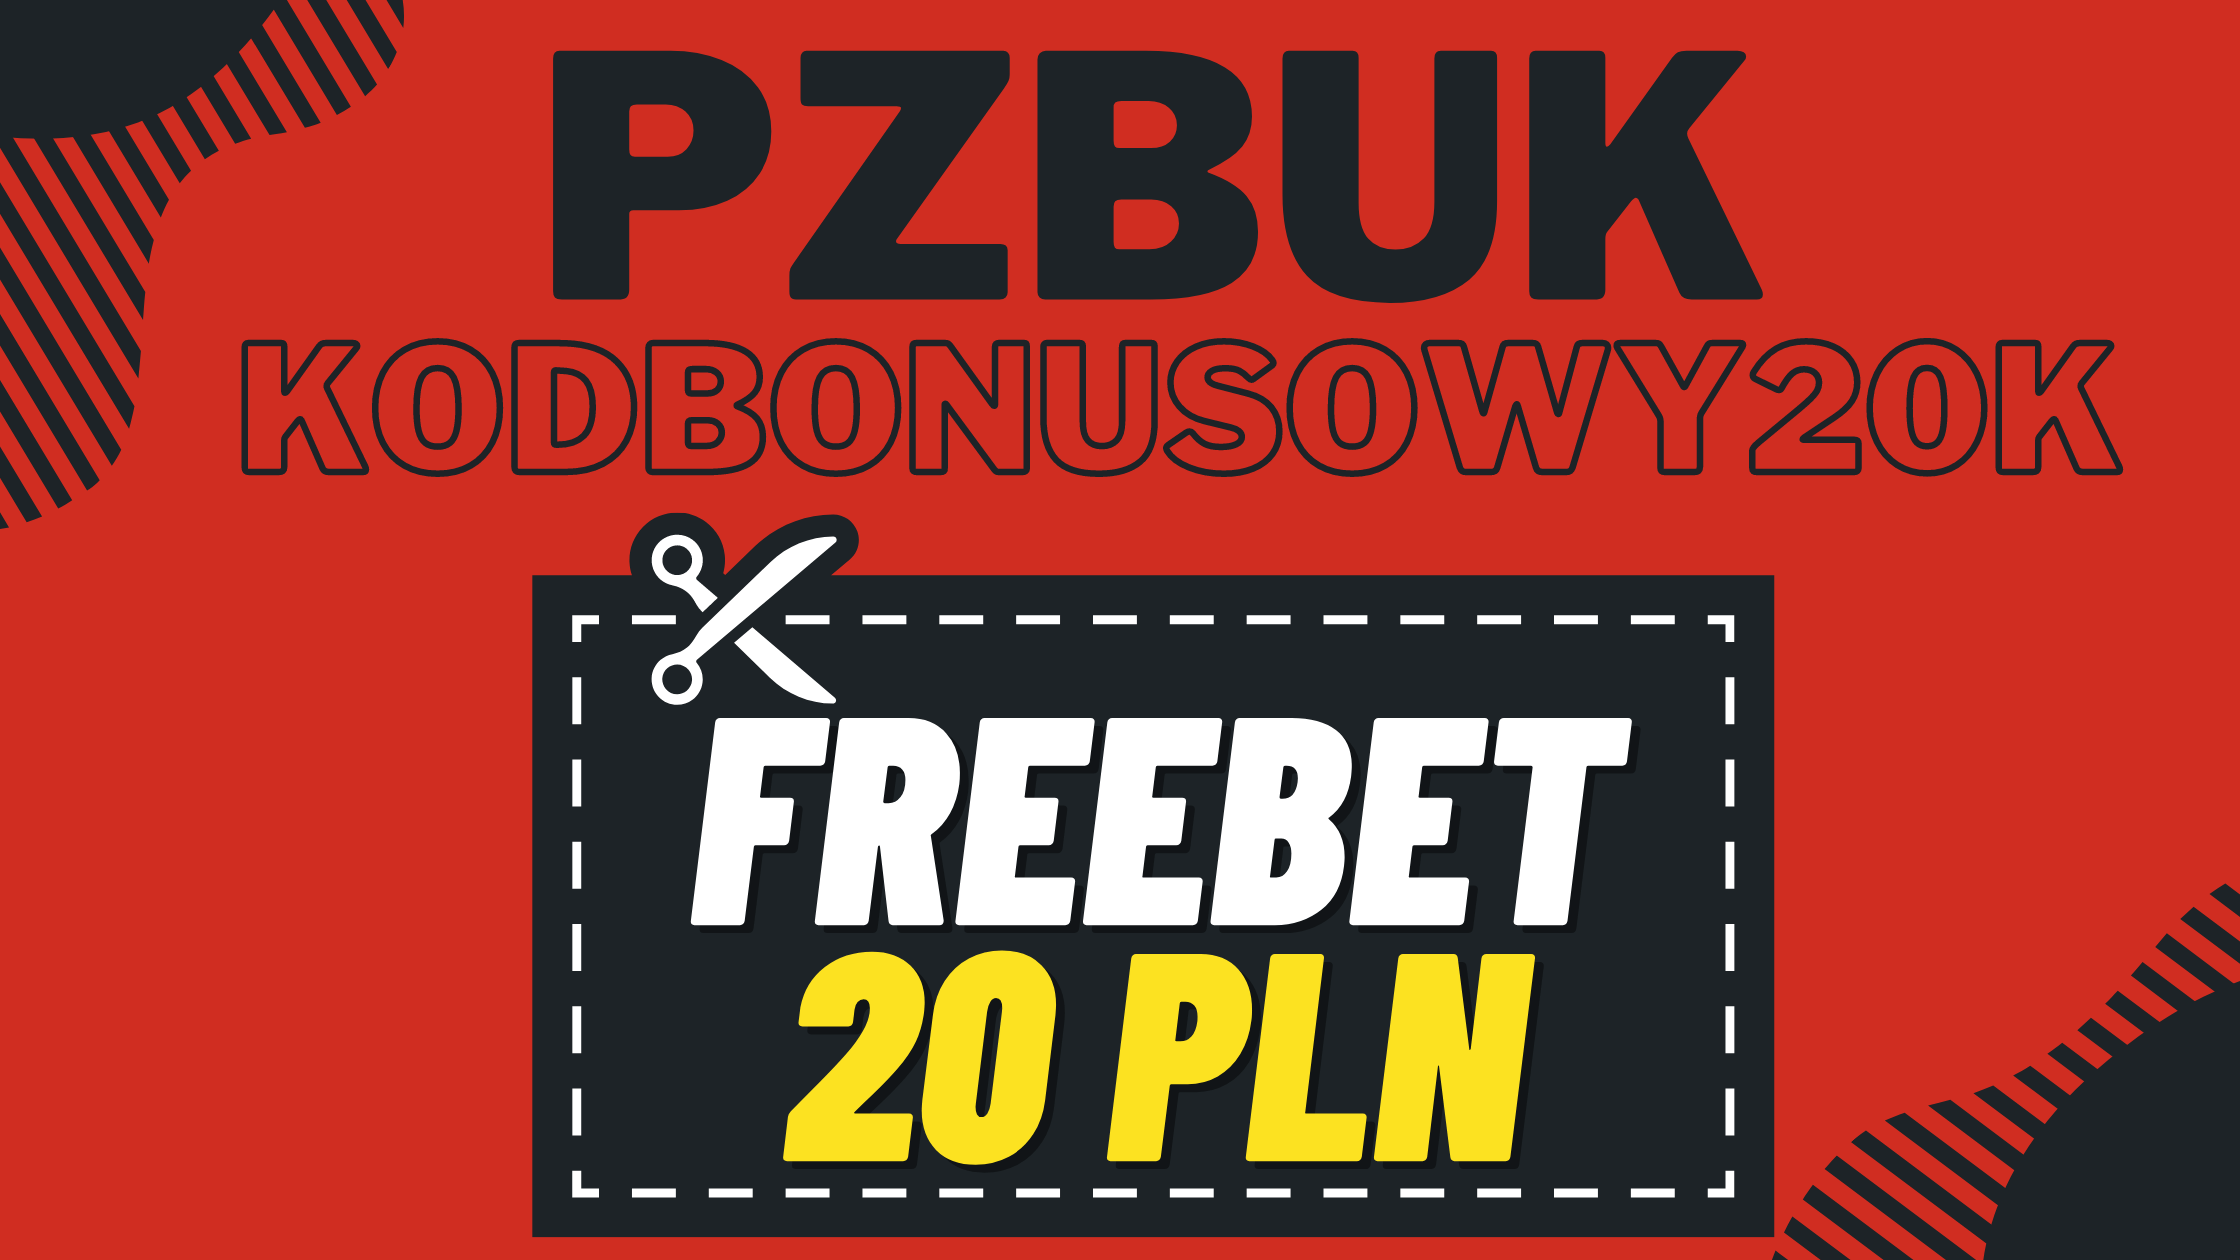 Kod bonusowy PZBuk - freebet 20 PLN na start